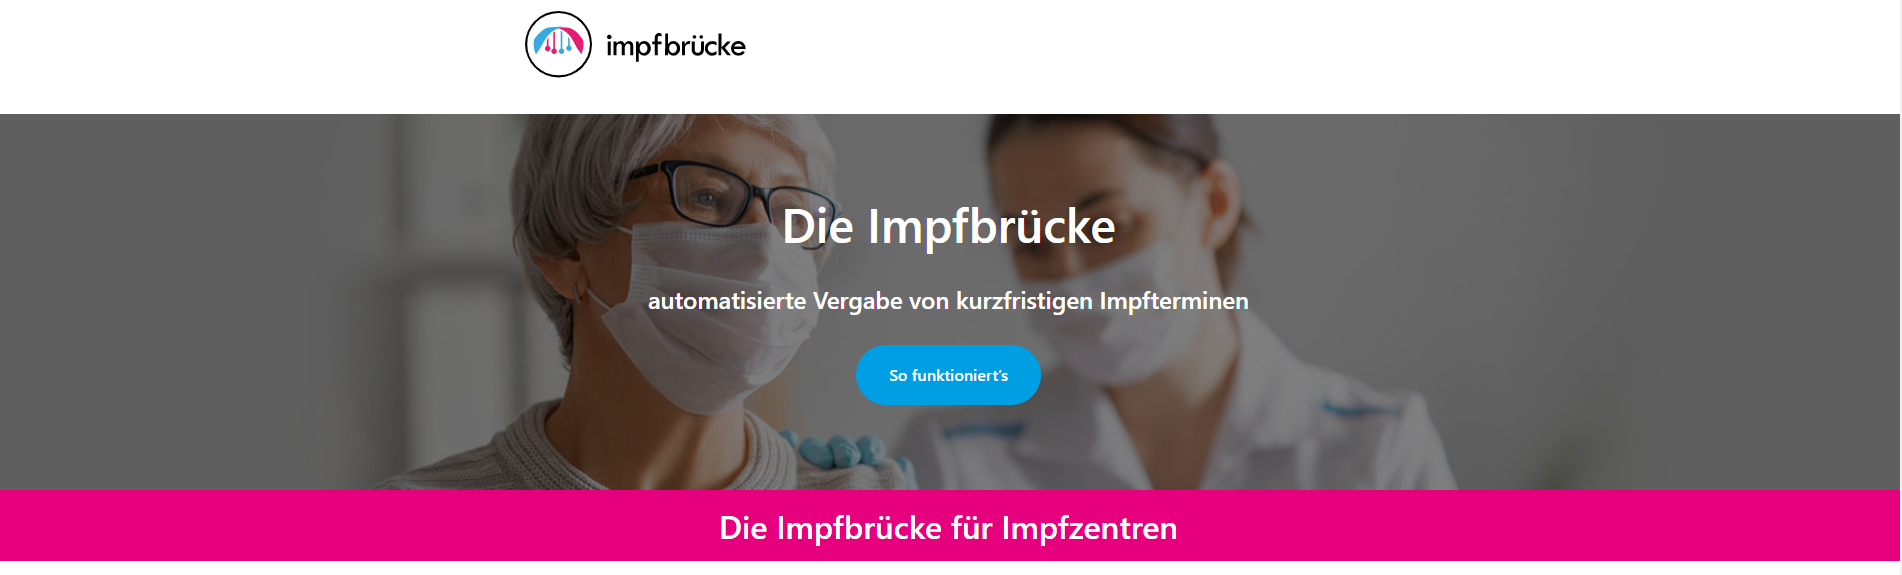 Screenshot impfbruecke.de